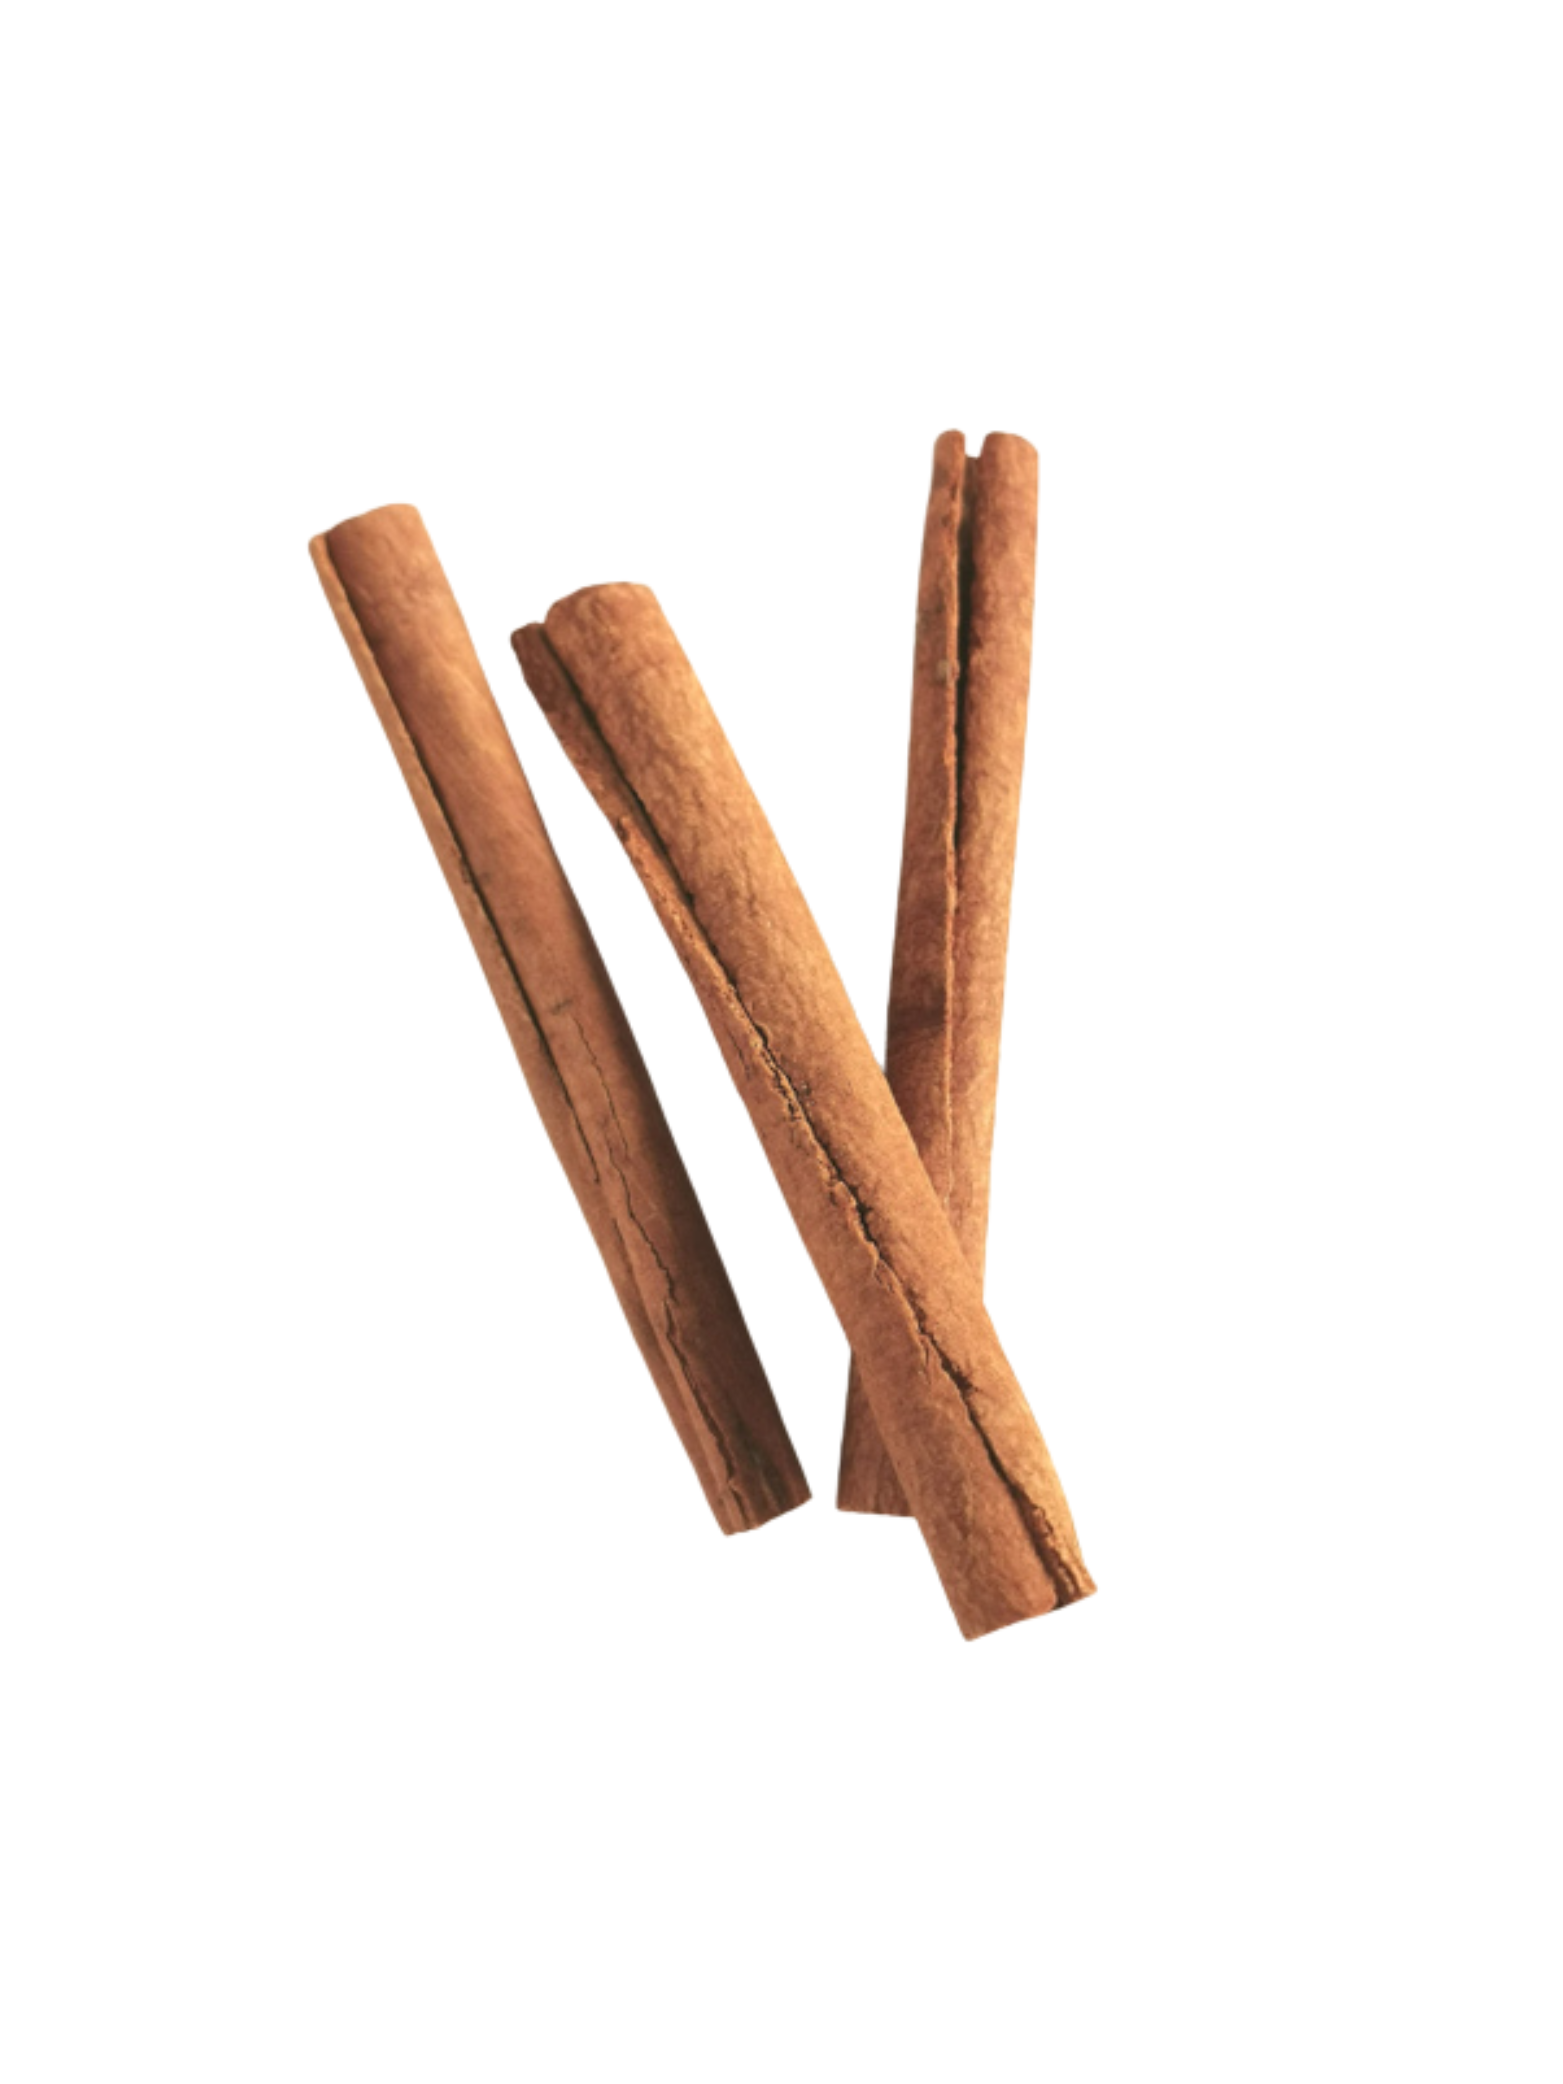 Cinnamon - quills